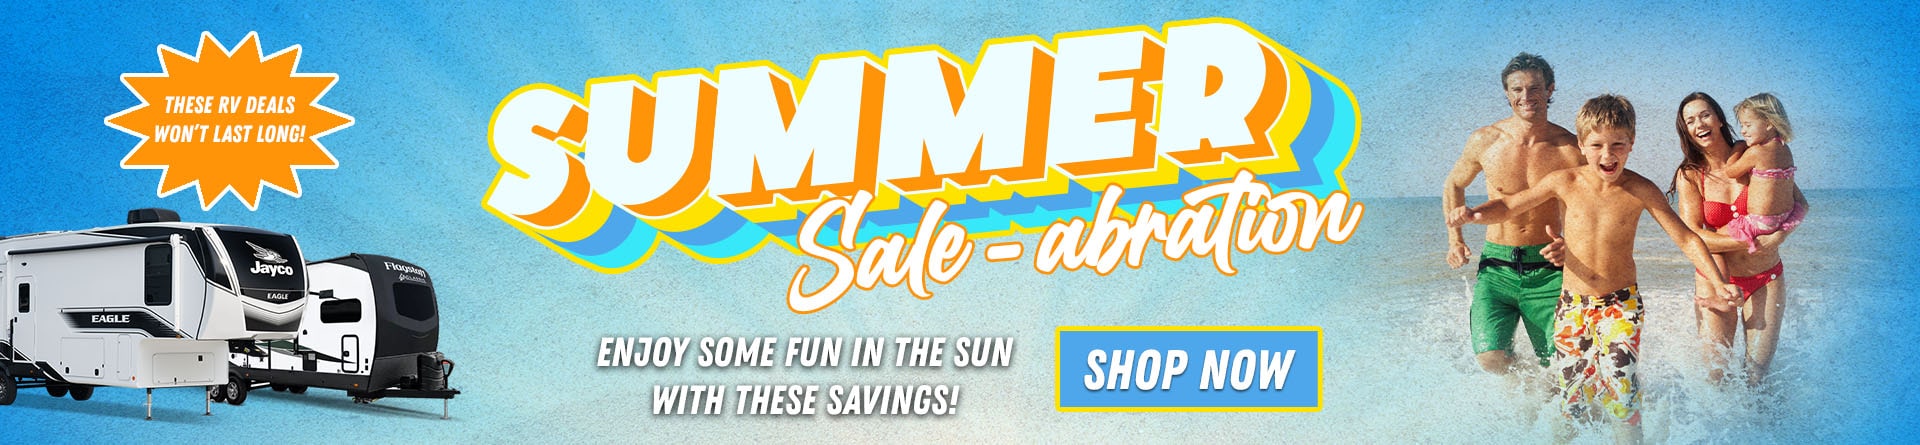 Summer Sale-Abration